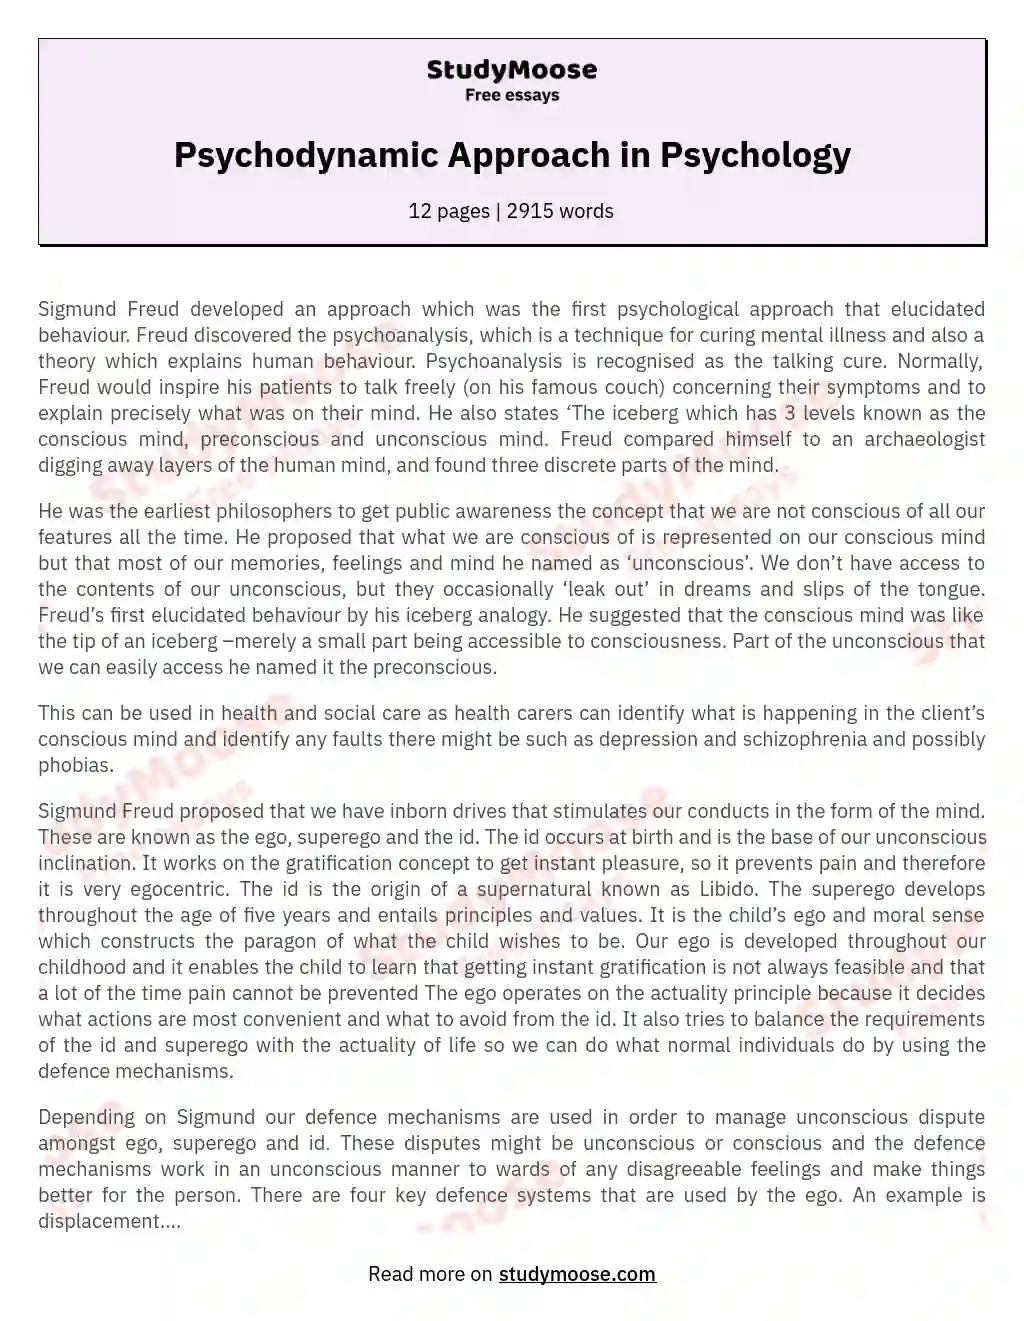 psychodynamic approach case study essay